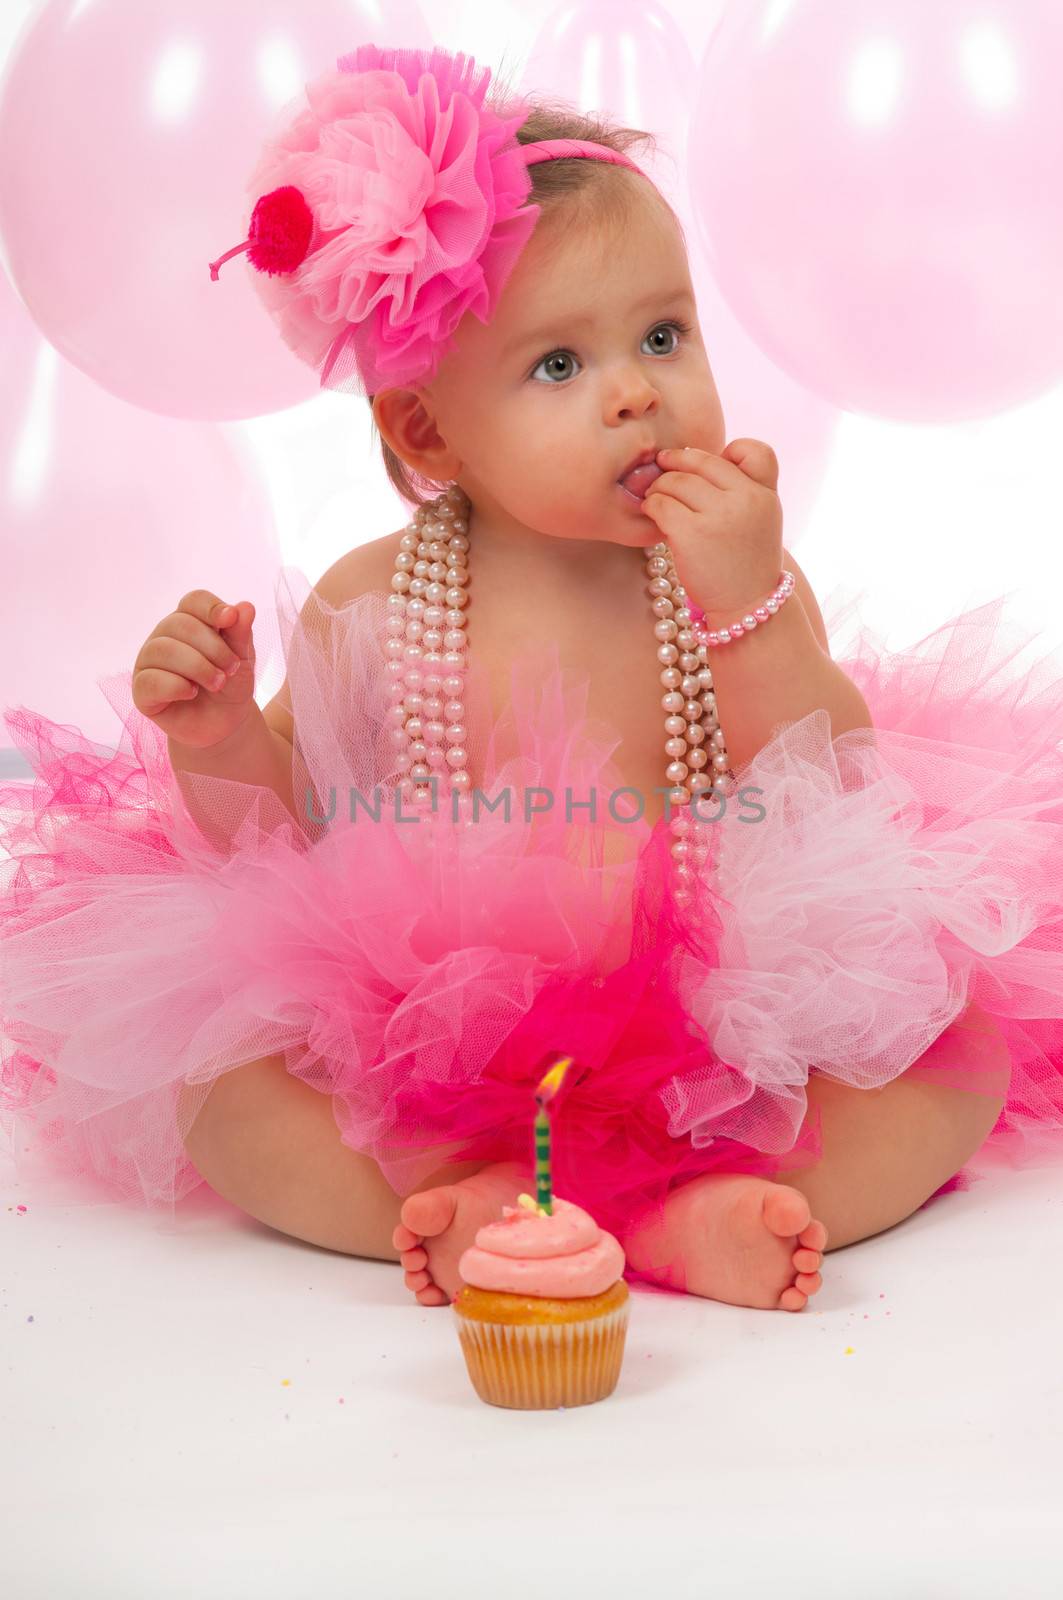 Birthday baby eating her cake